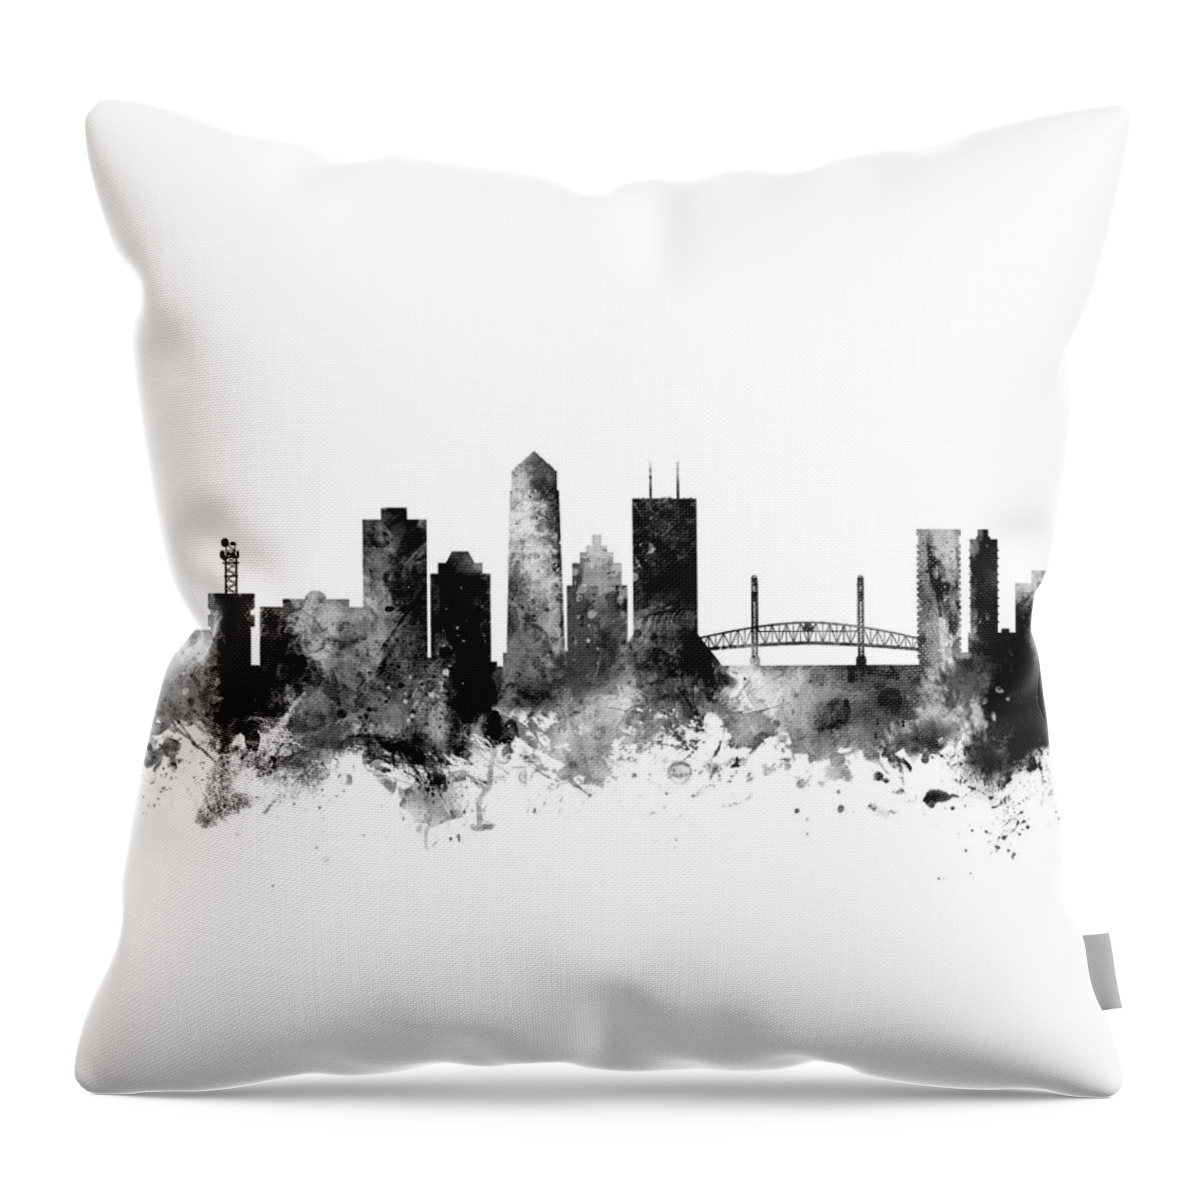 Jacksonville Throw Pillow featuring the digital art Jacksonville Florida Skyline by Michael Tompsett